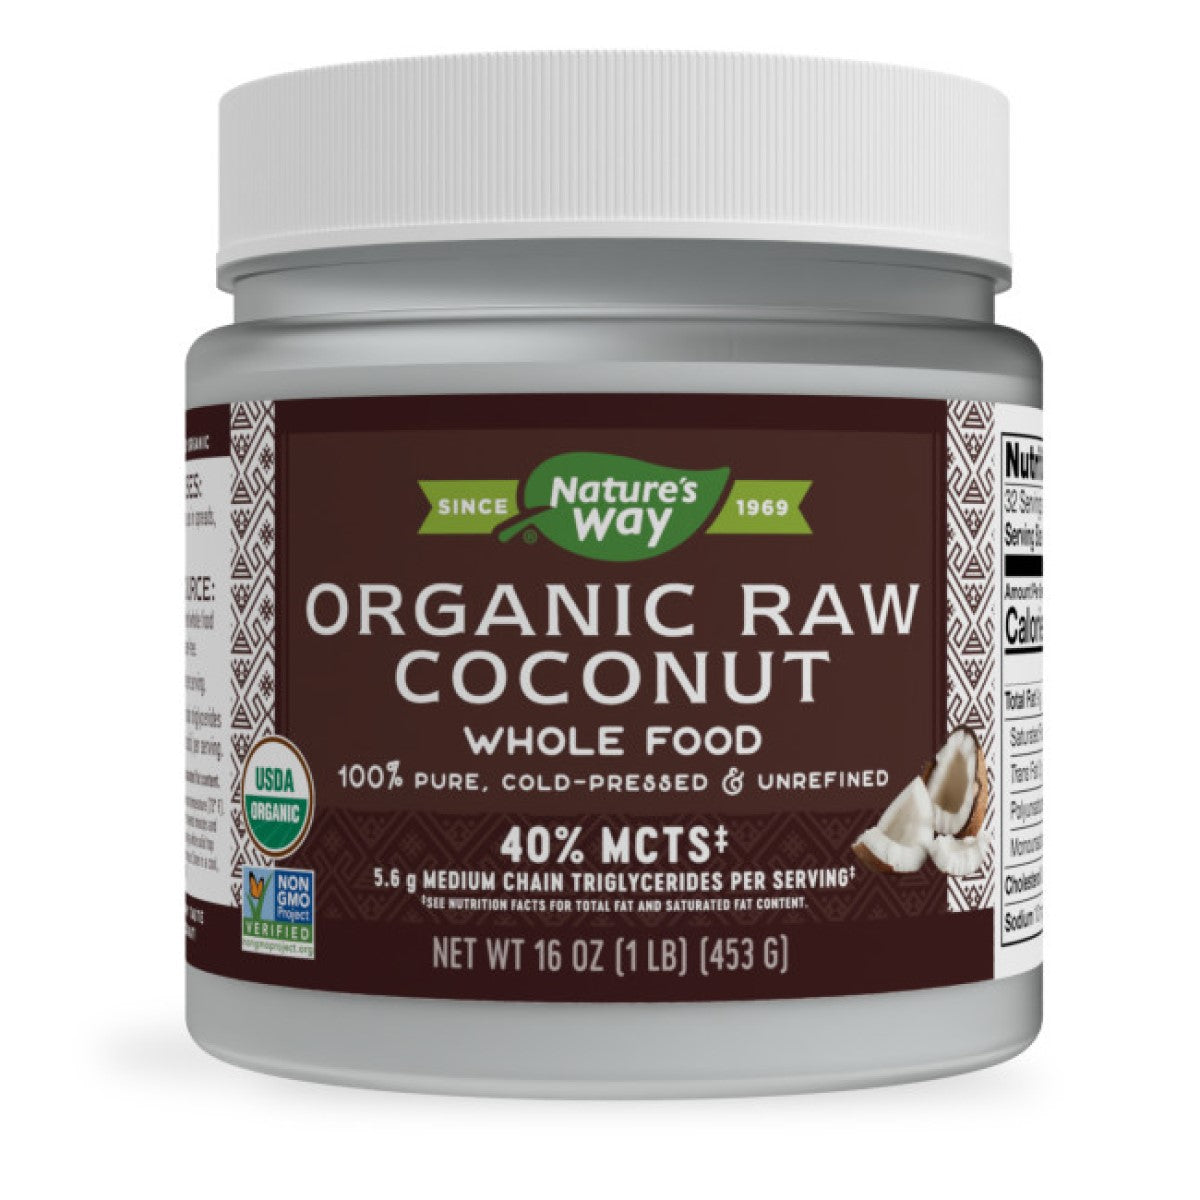 Primary image of Organic Raw Coconut Food